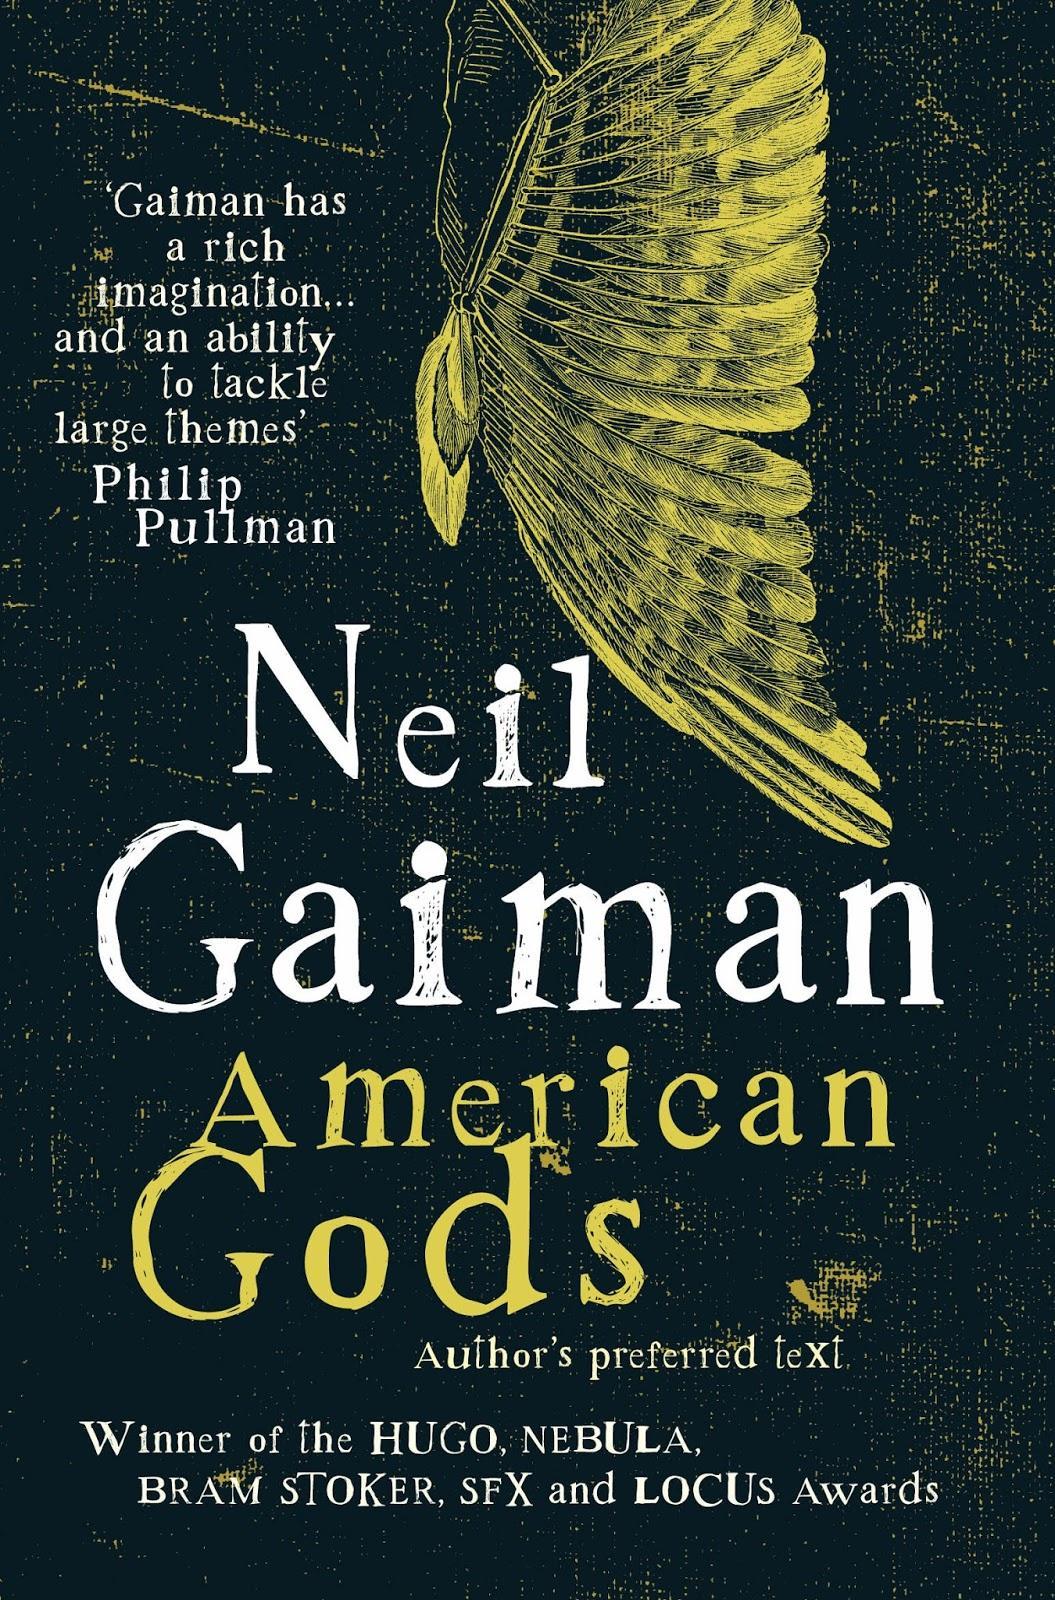 American Gods (2002, Headline Publishing Group)